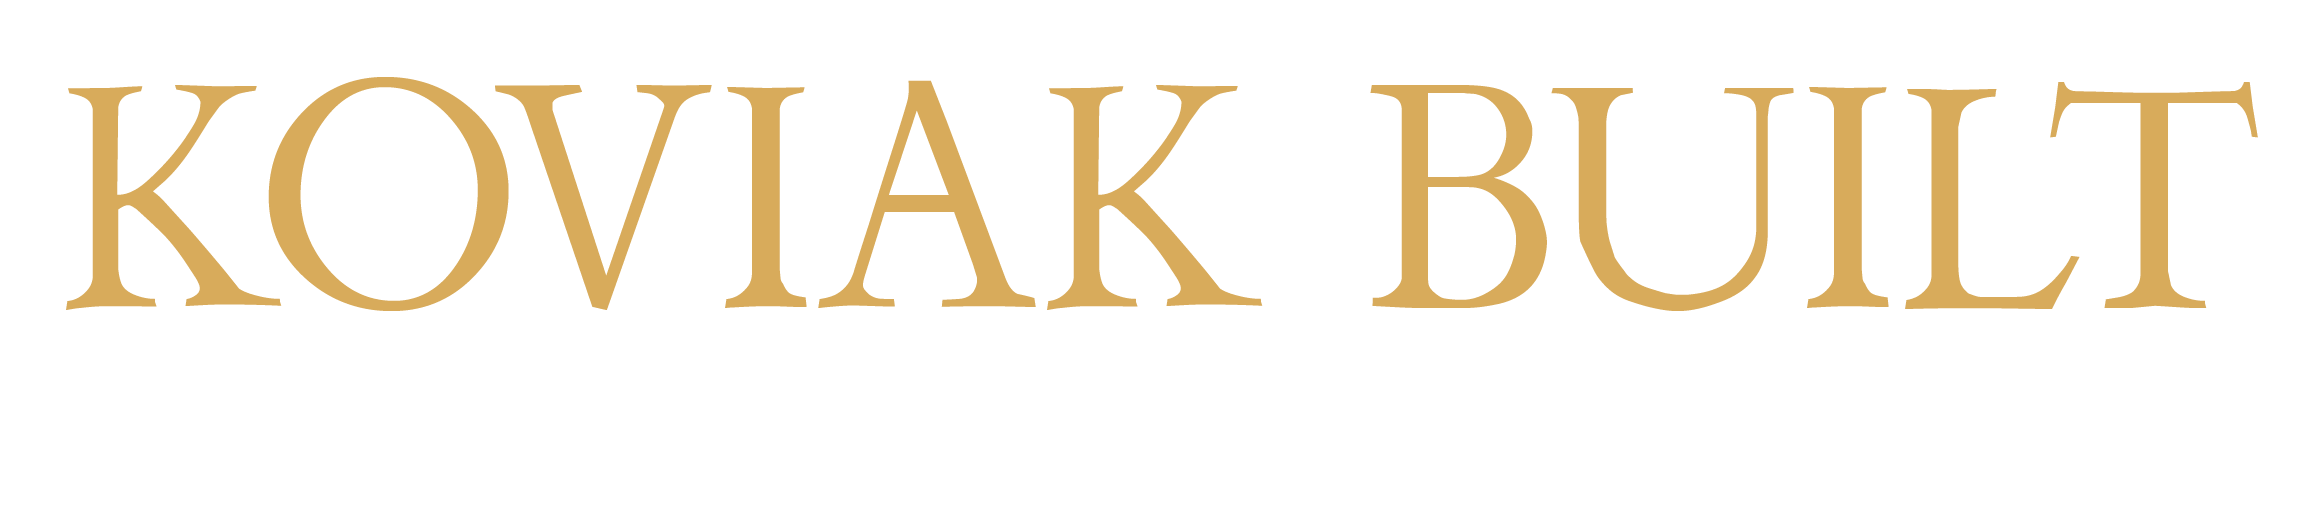 Koviak Built Logo